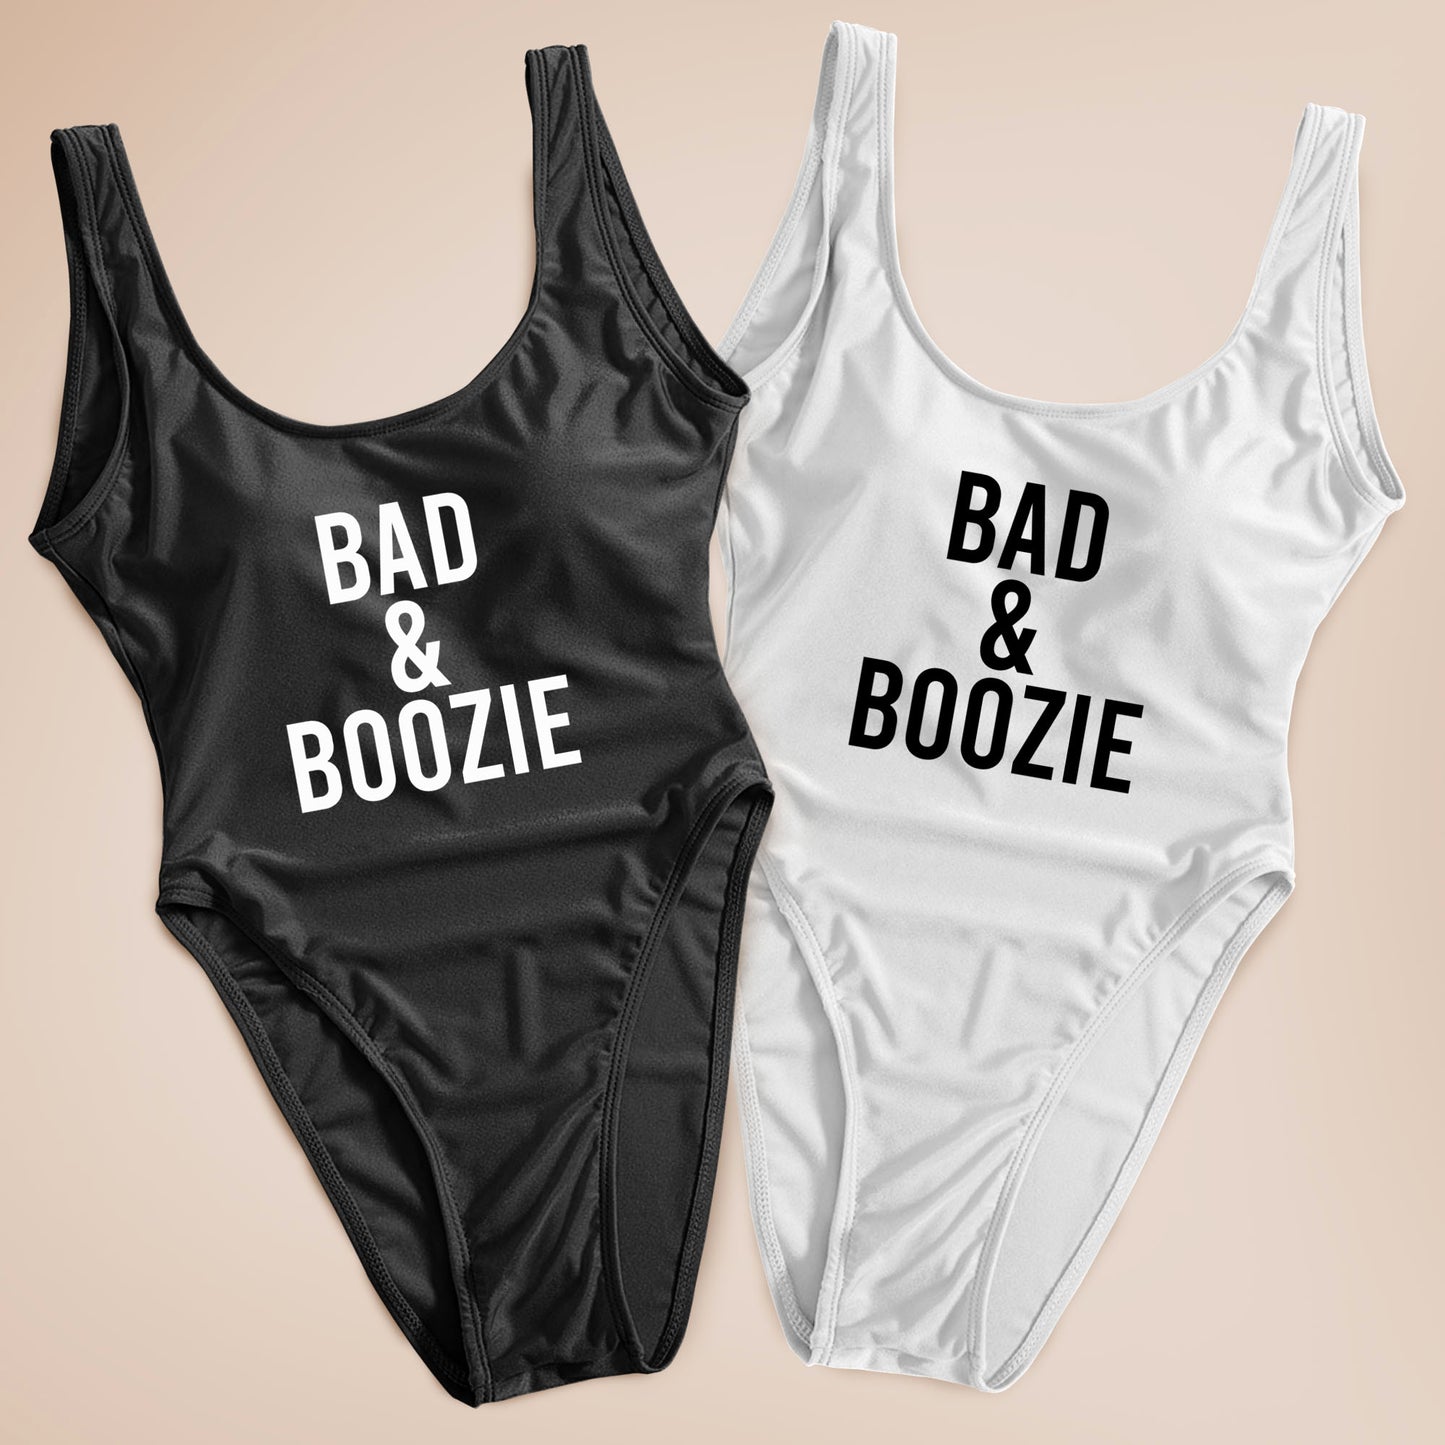 Bad & Boozie Bride Swimsuit